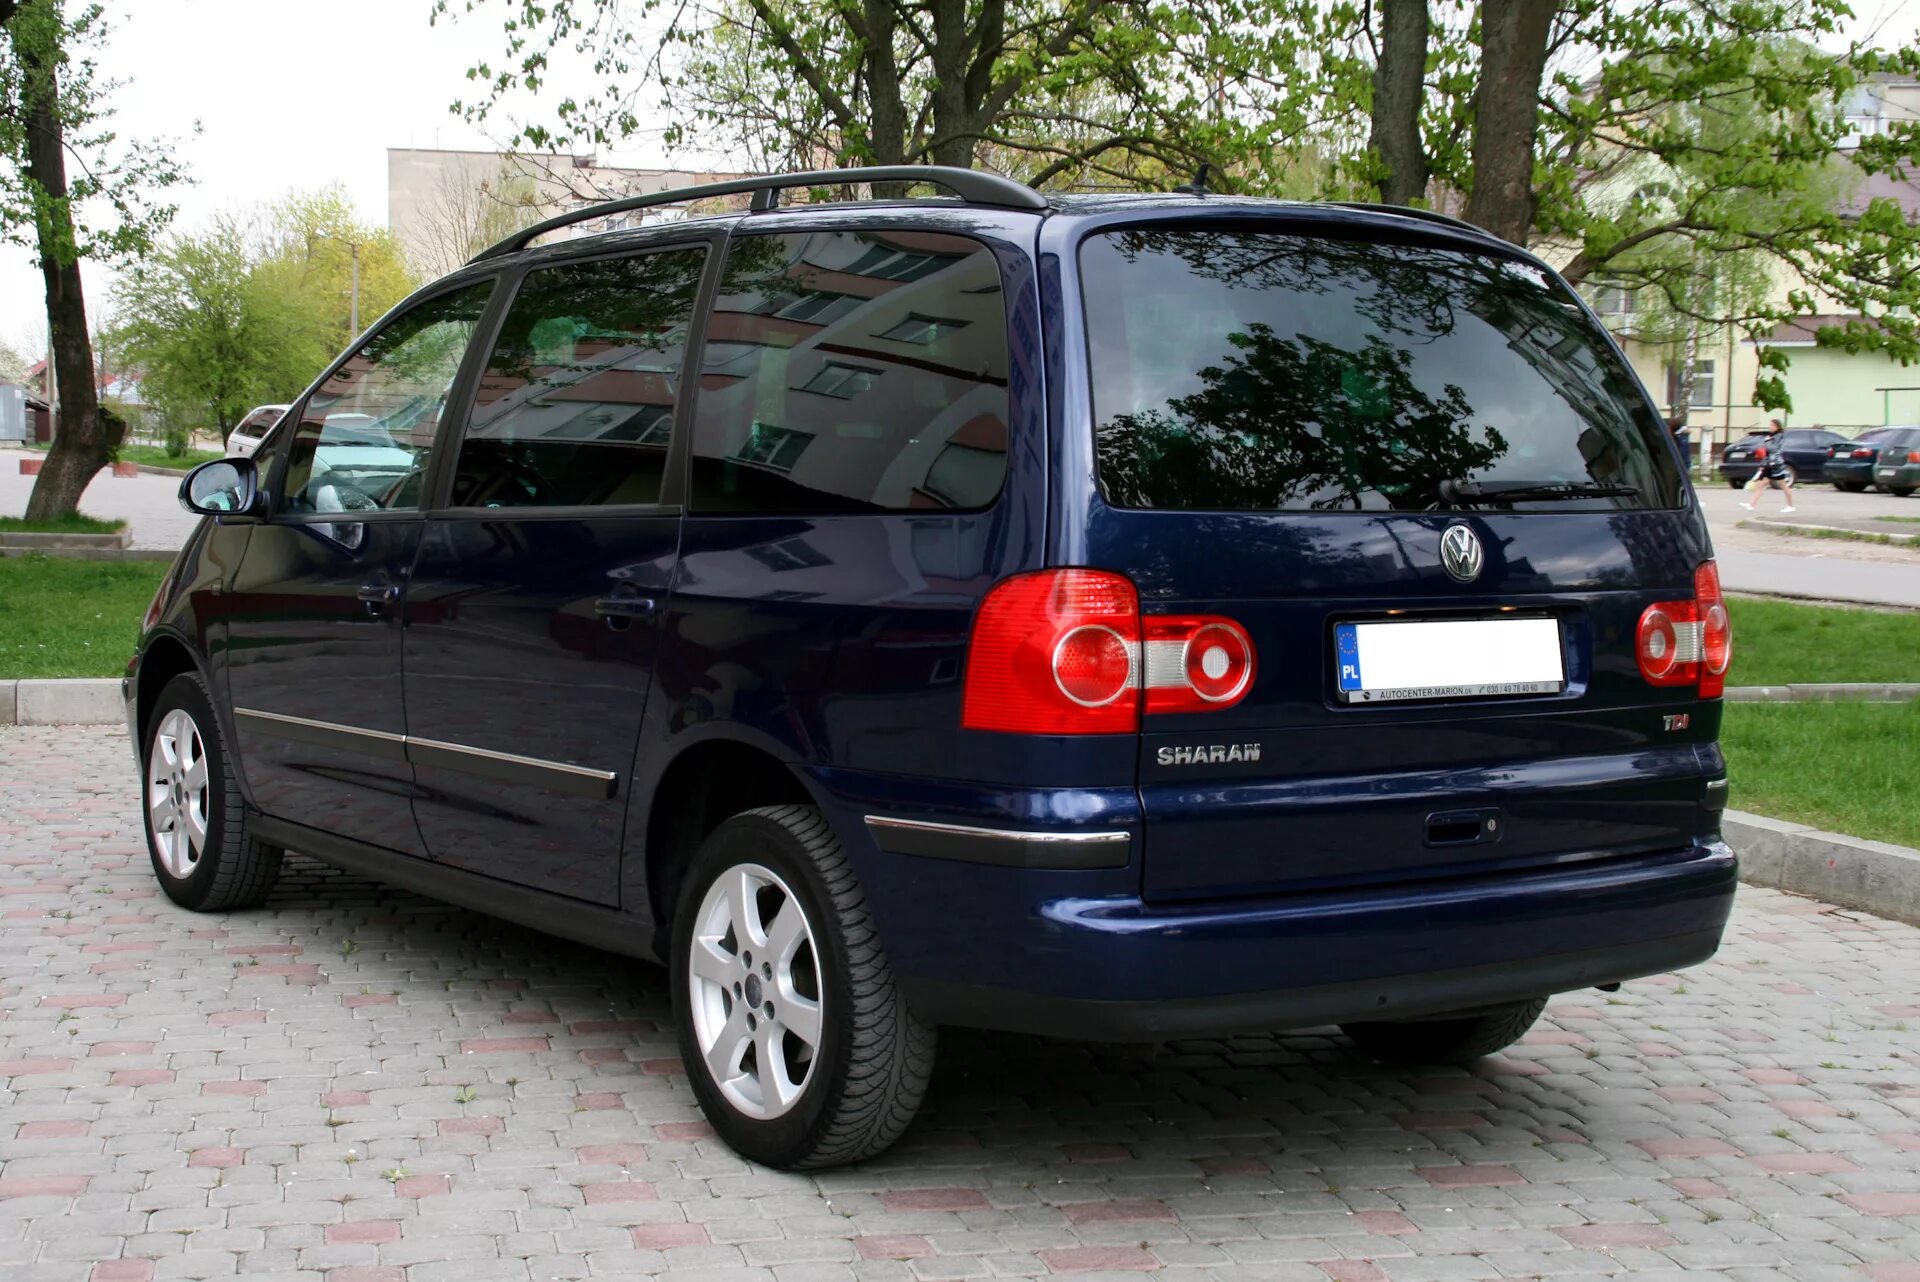 Volkswagen sharan 1.9. Фольксваген Шаран 1. Фольксваген Шаран 2001. Фольксваген Шаран 2001 года. Фольксваген Шаран 1.9 дизель.